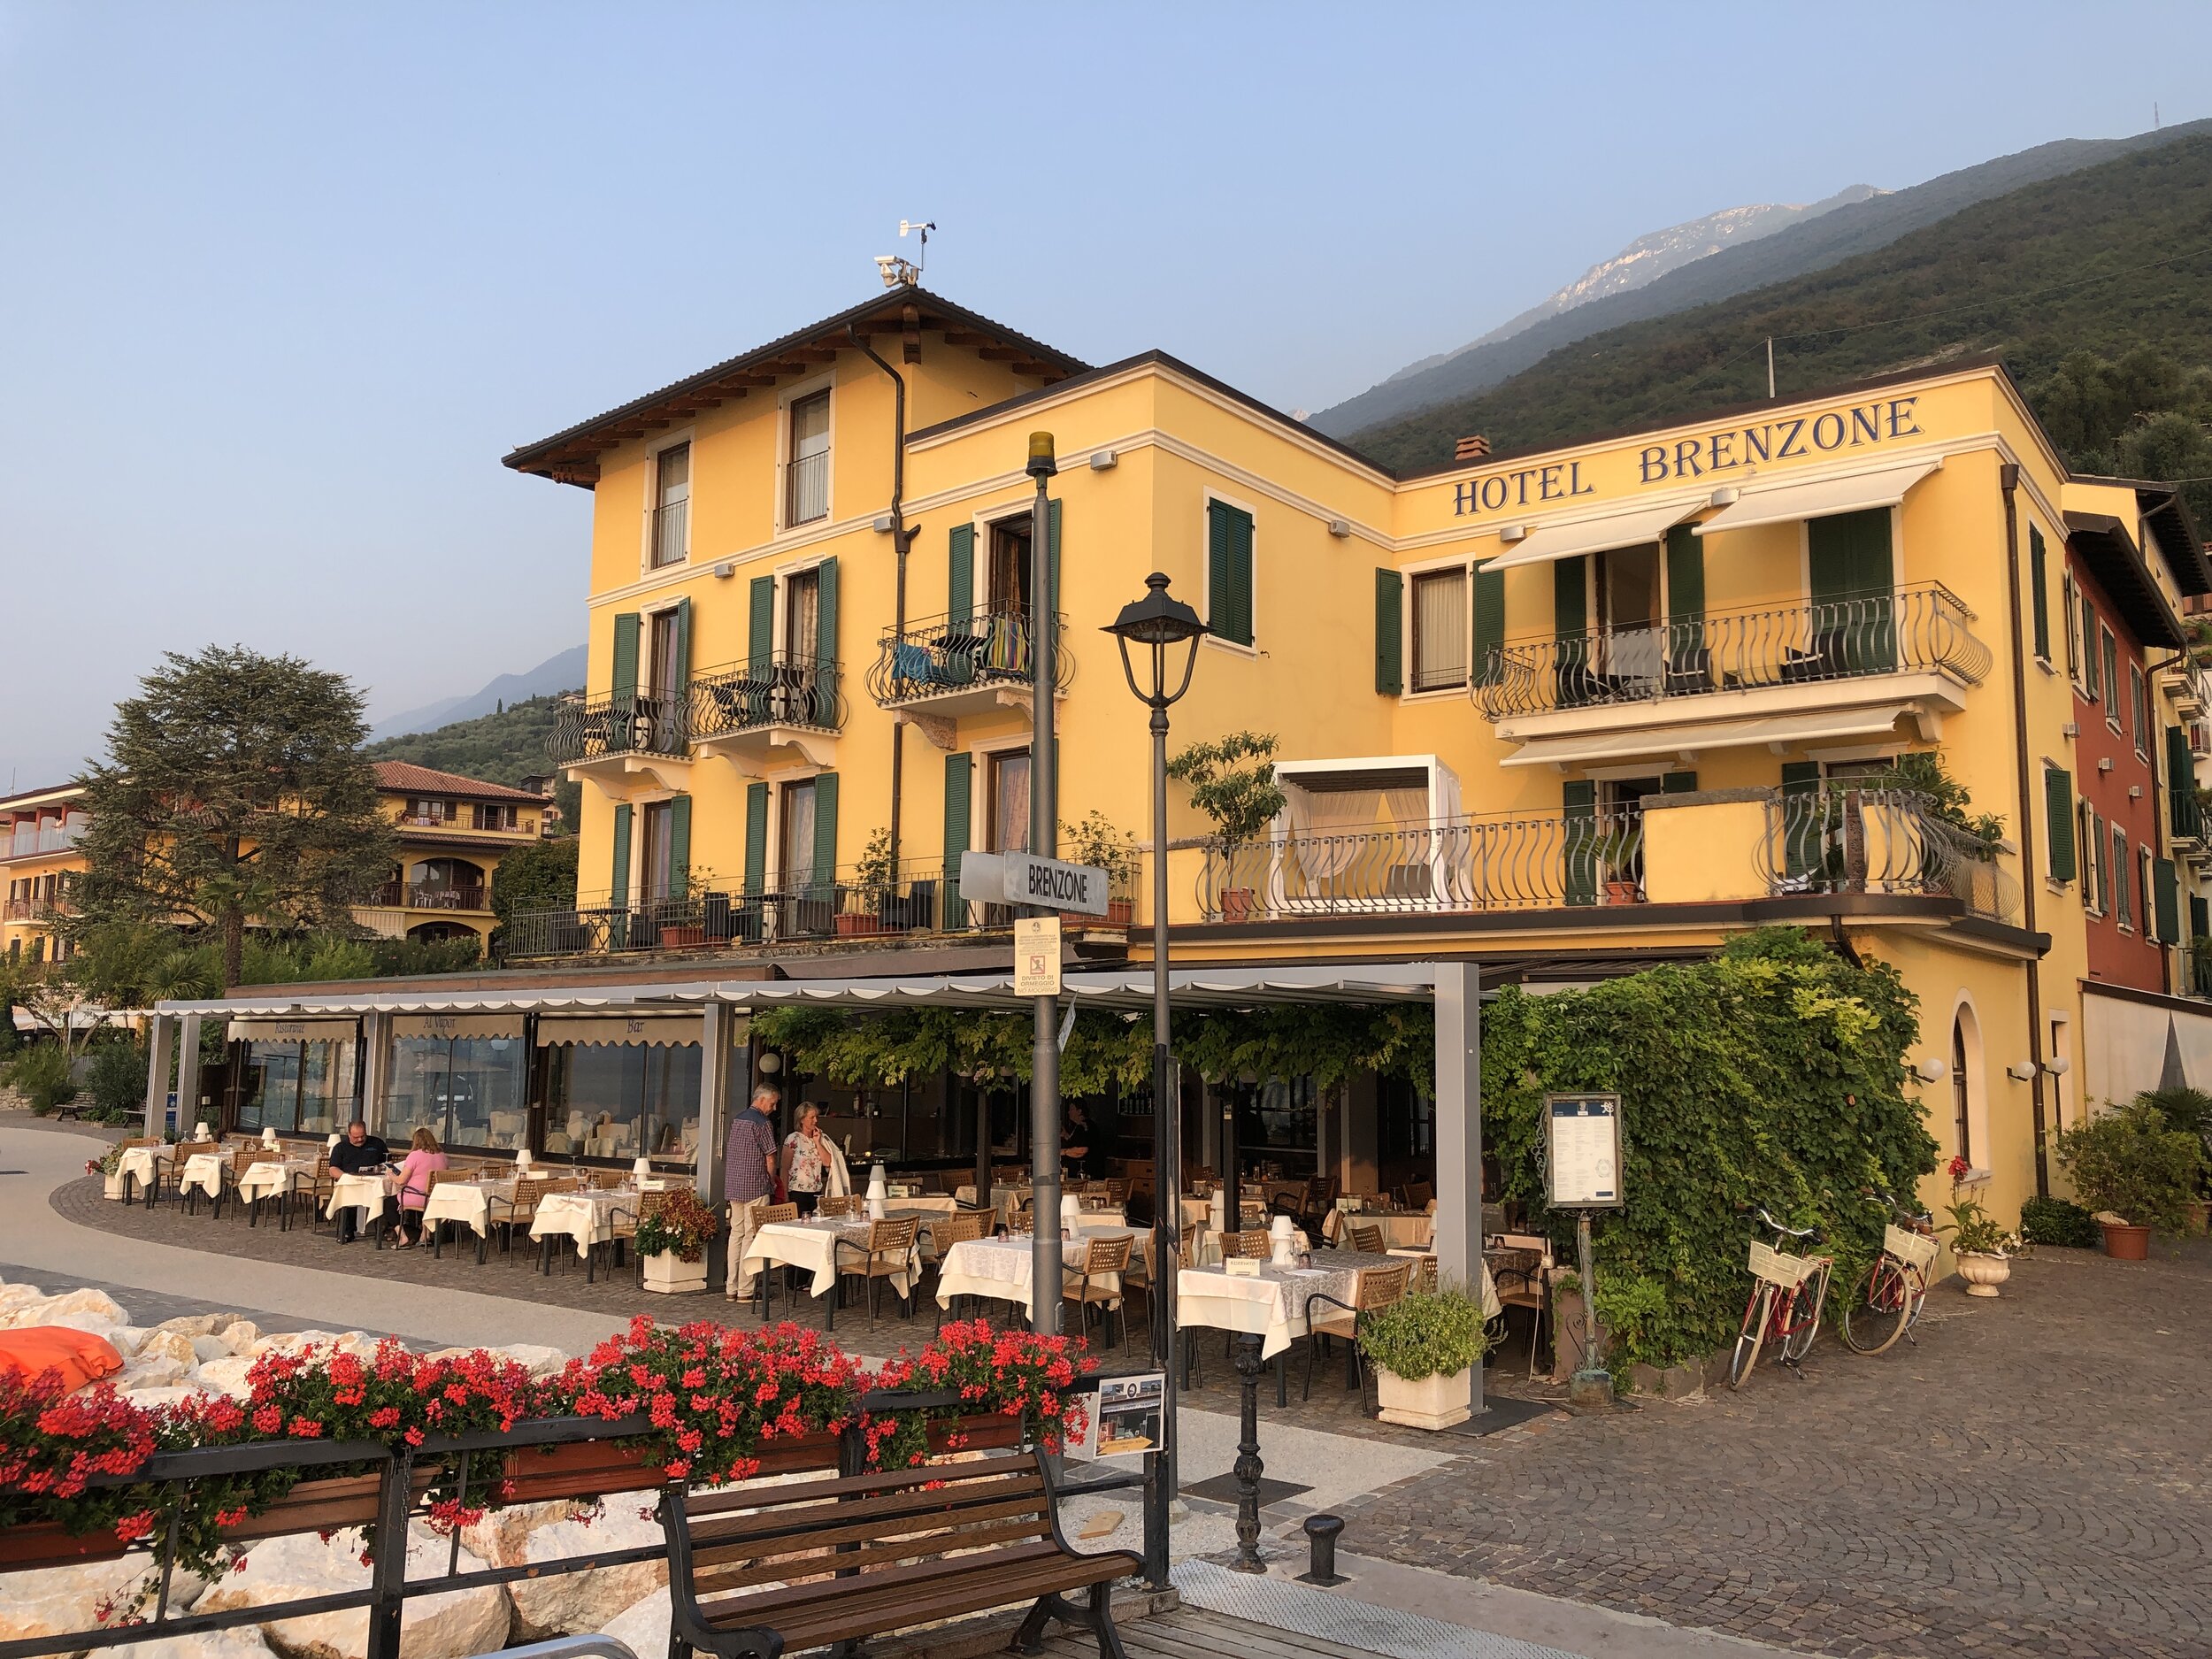 Boutique Hotel Brenzone, Lake Garda, Italy